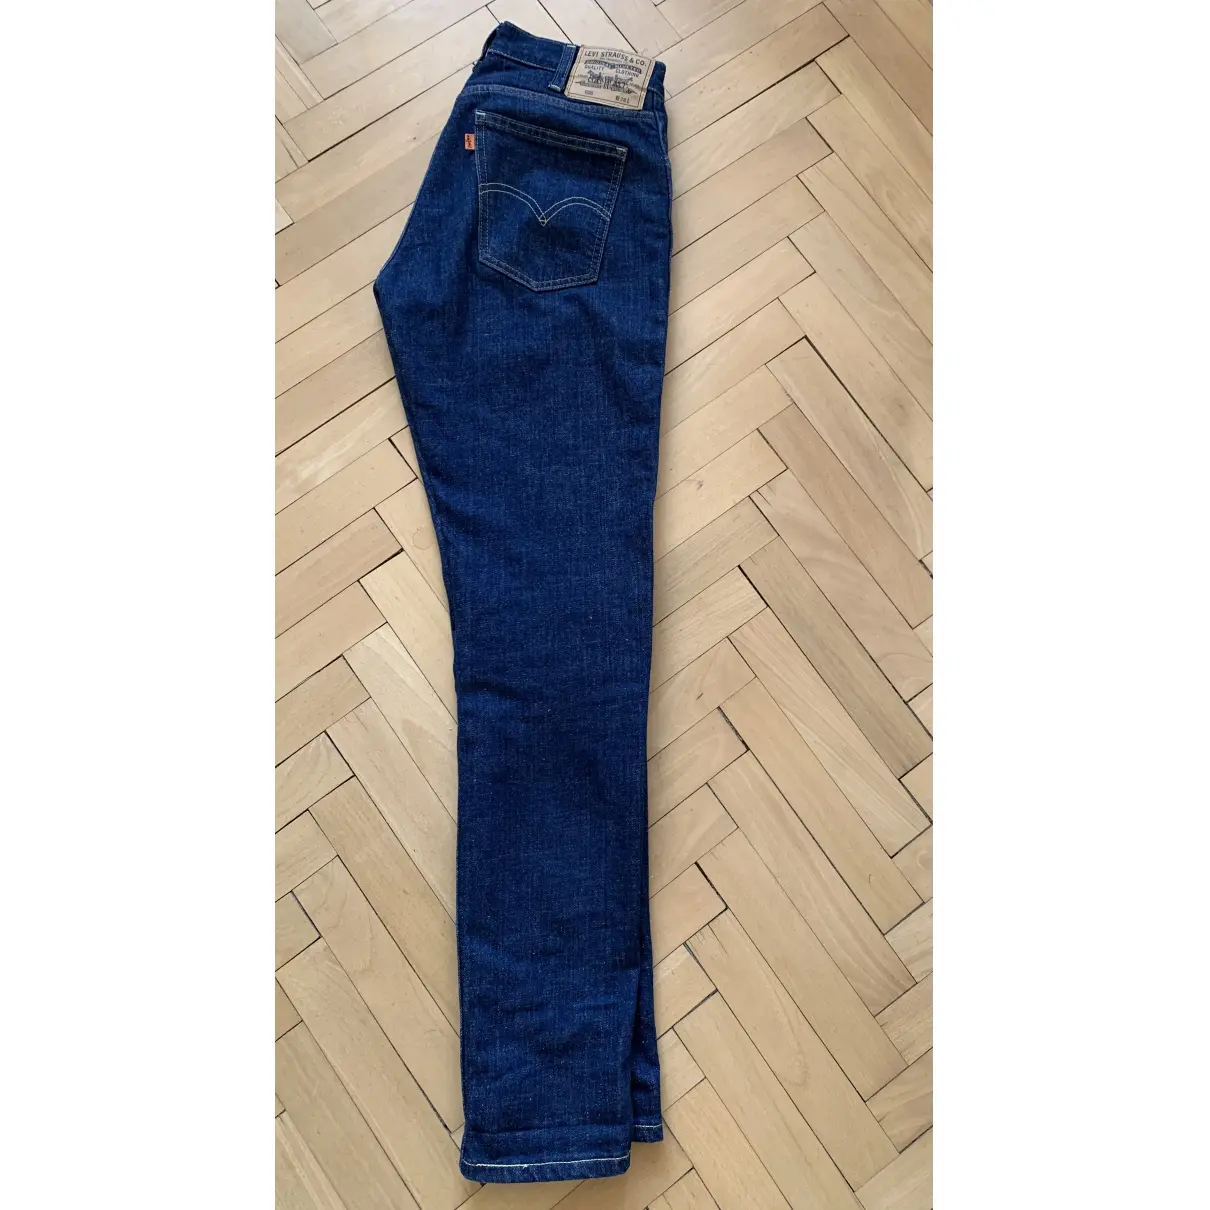 Buy Levi's Slim jeans online